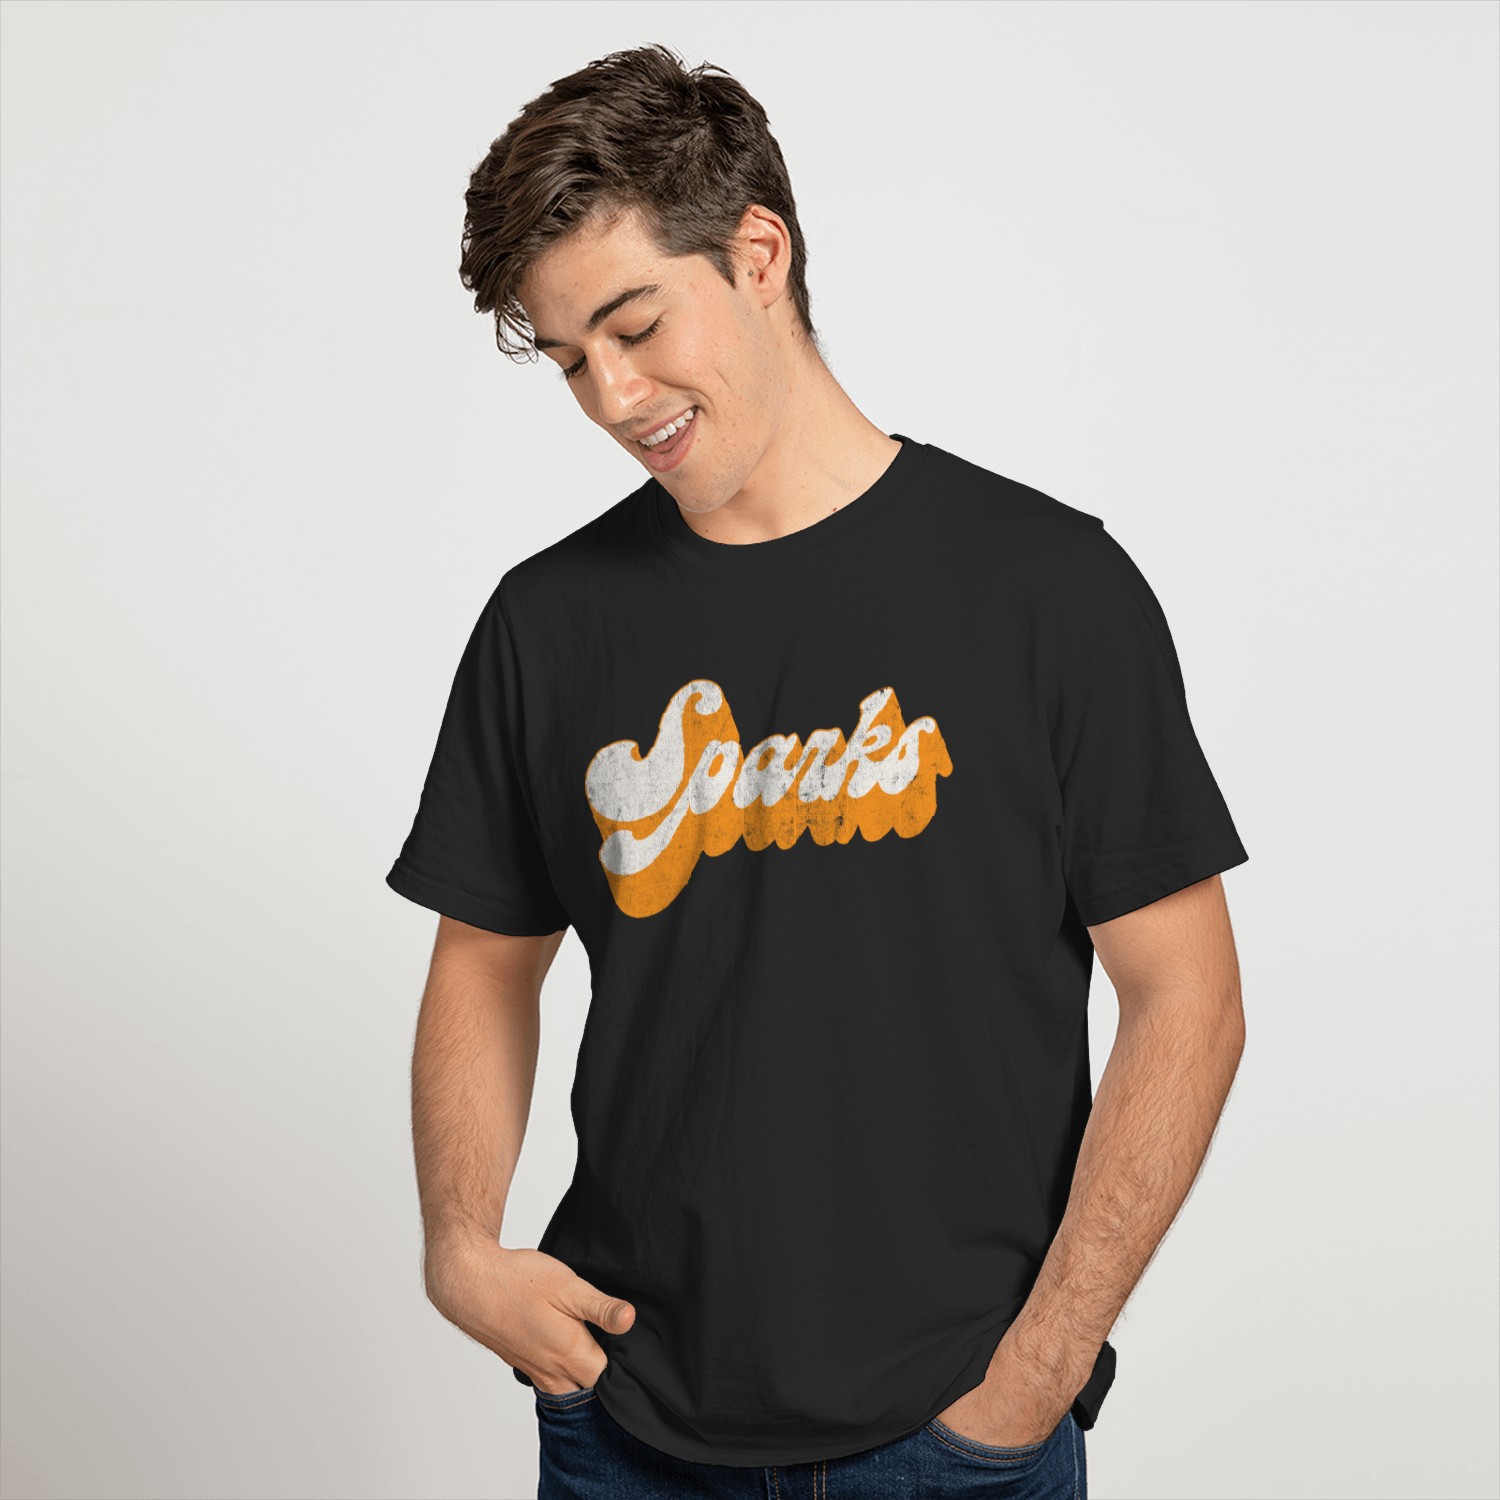 Sparks - Vintage Style Retro Aesthetic Design - Sparks - T-Shirt